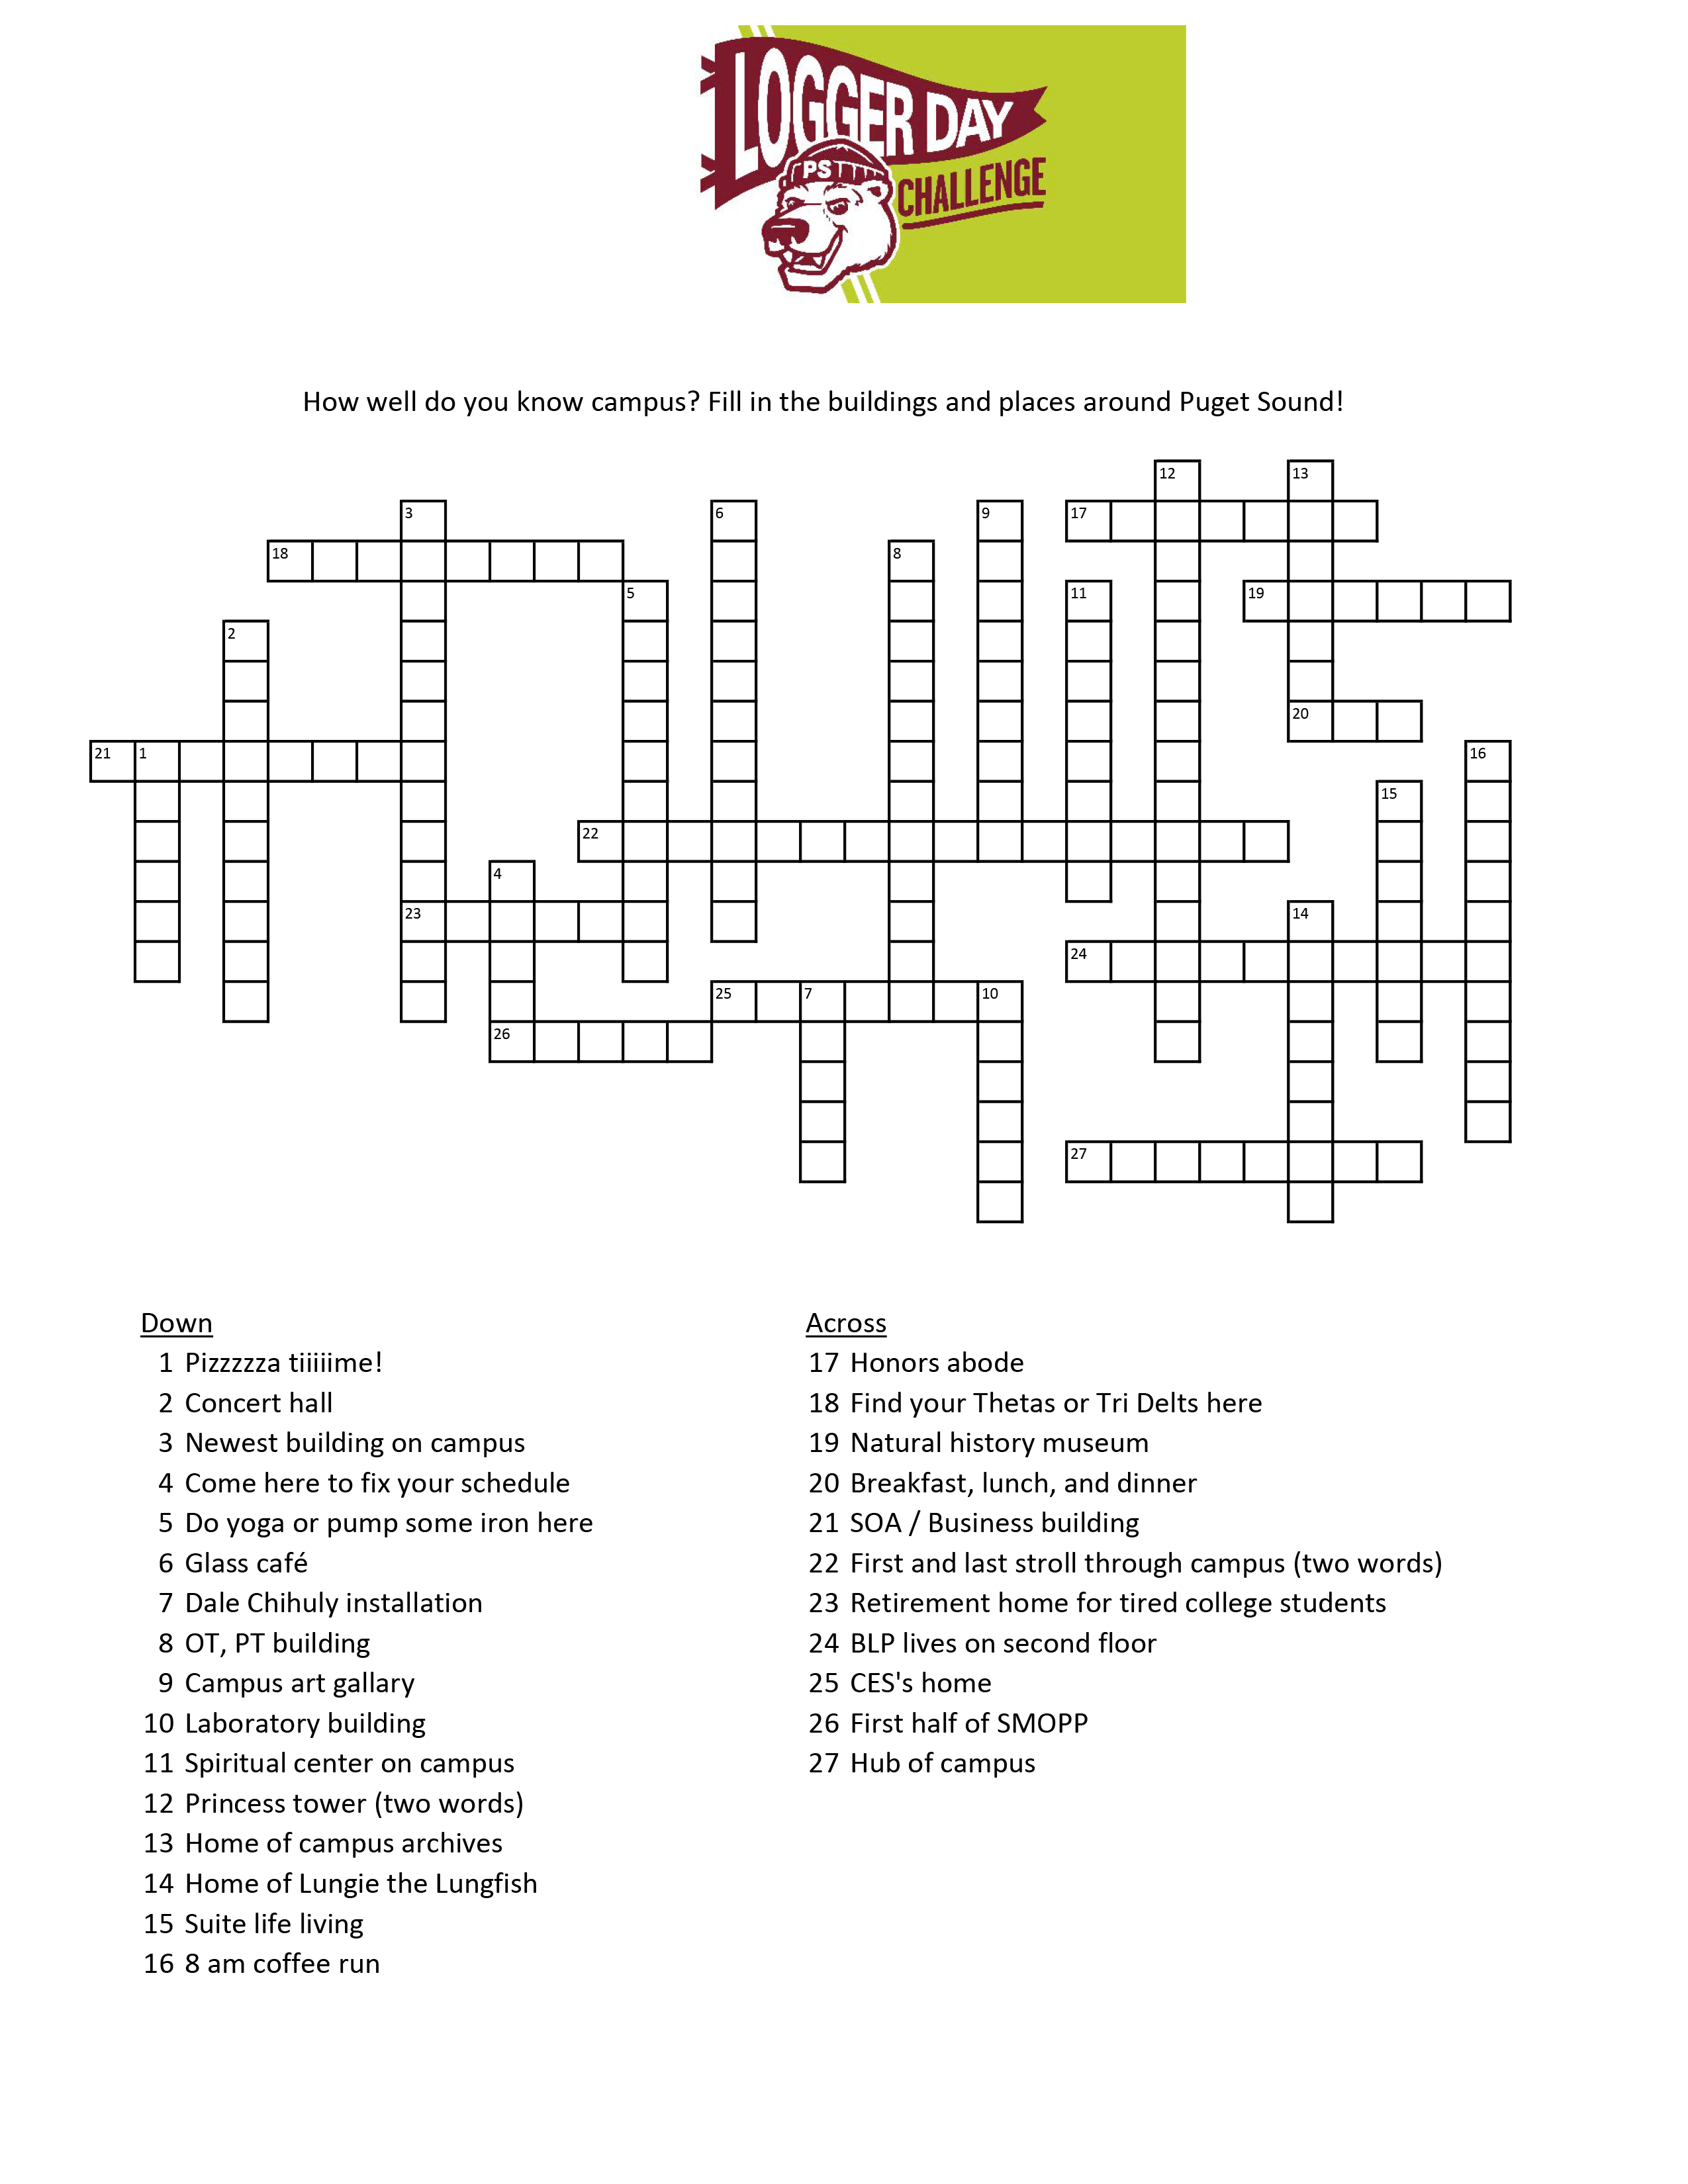 Logger Day Challenge crossword puzzle